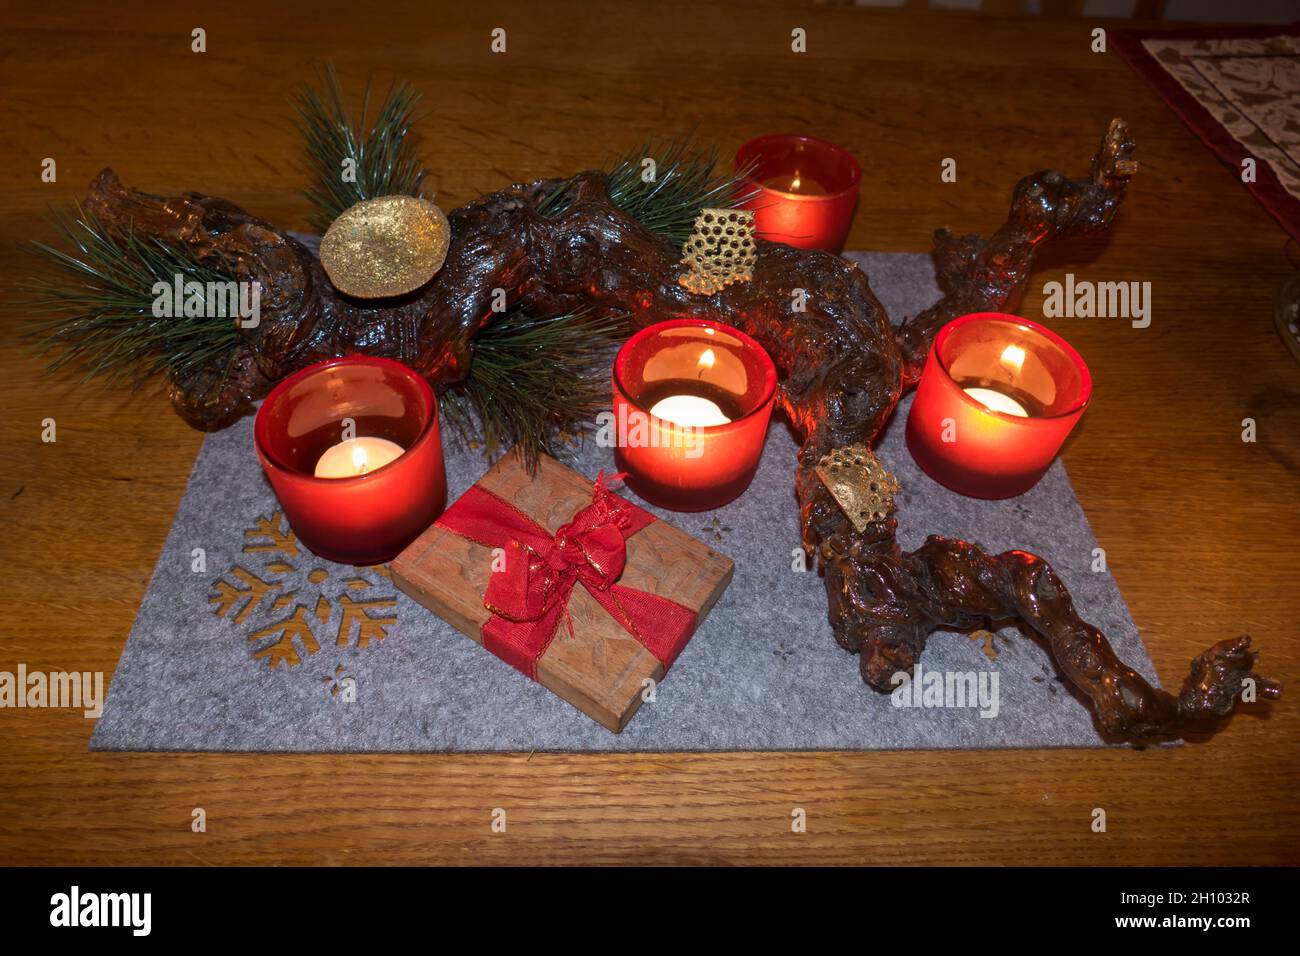 Rebwurzel, Modelo und Kerzen zum Adventsgesteck dekoriert Foto de stock